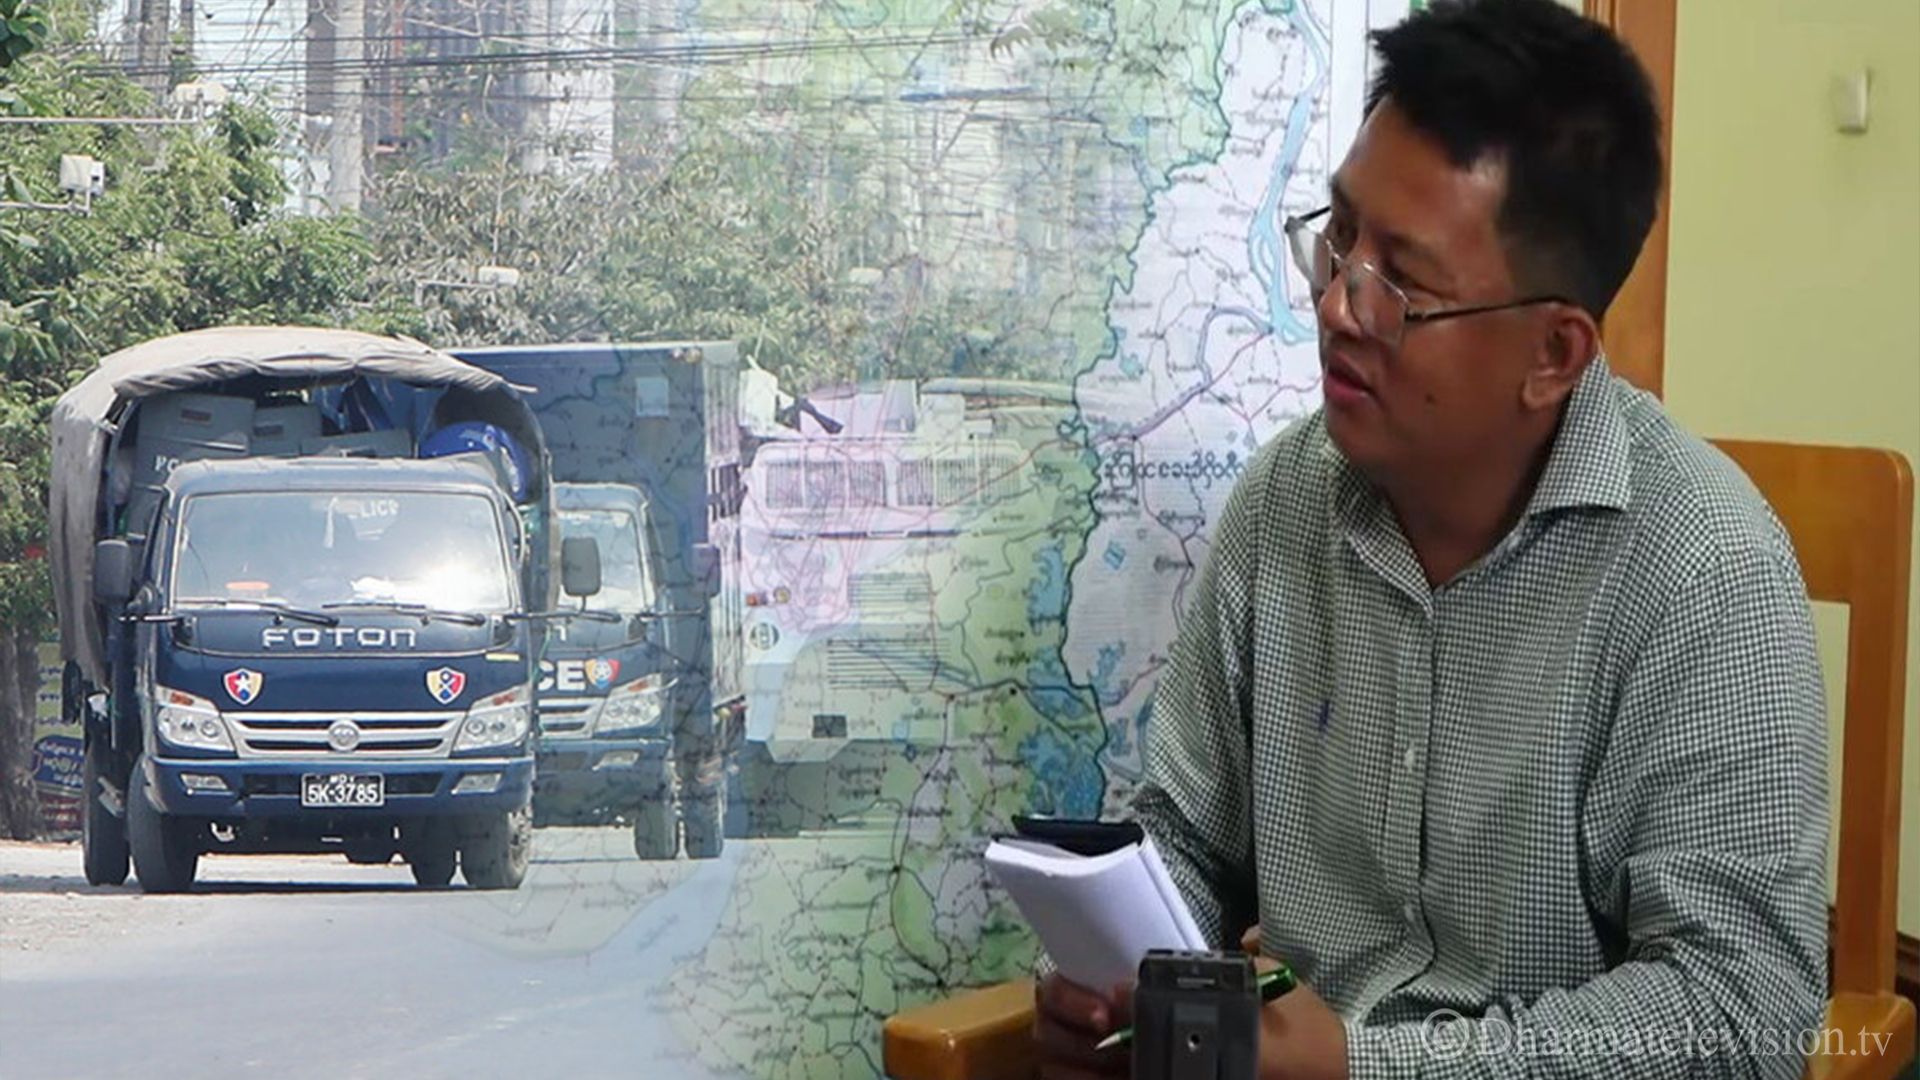 BBC journalist arrested in Myanmar released